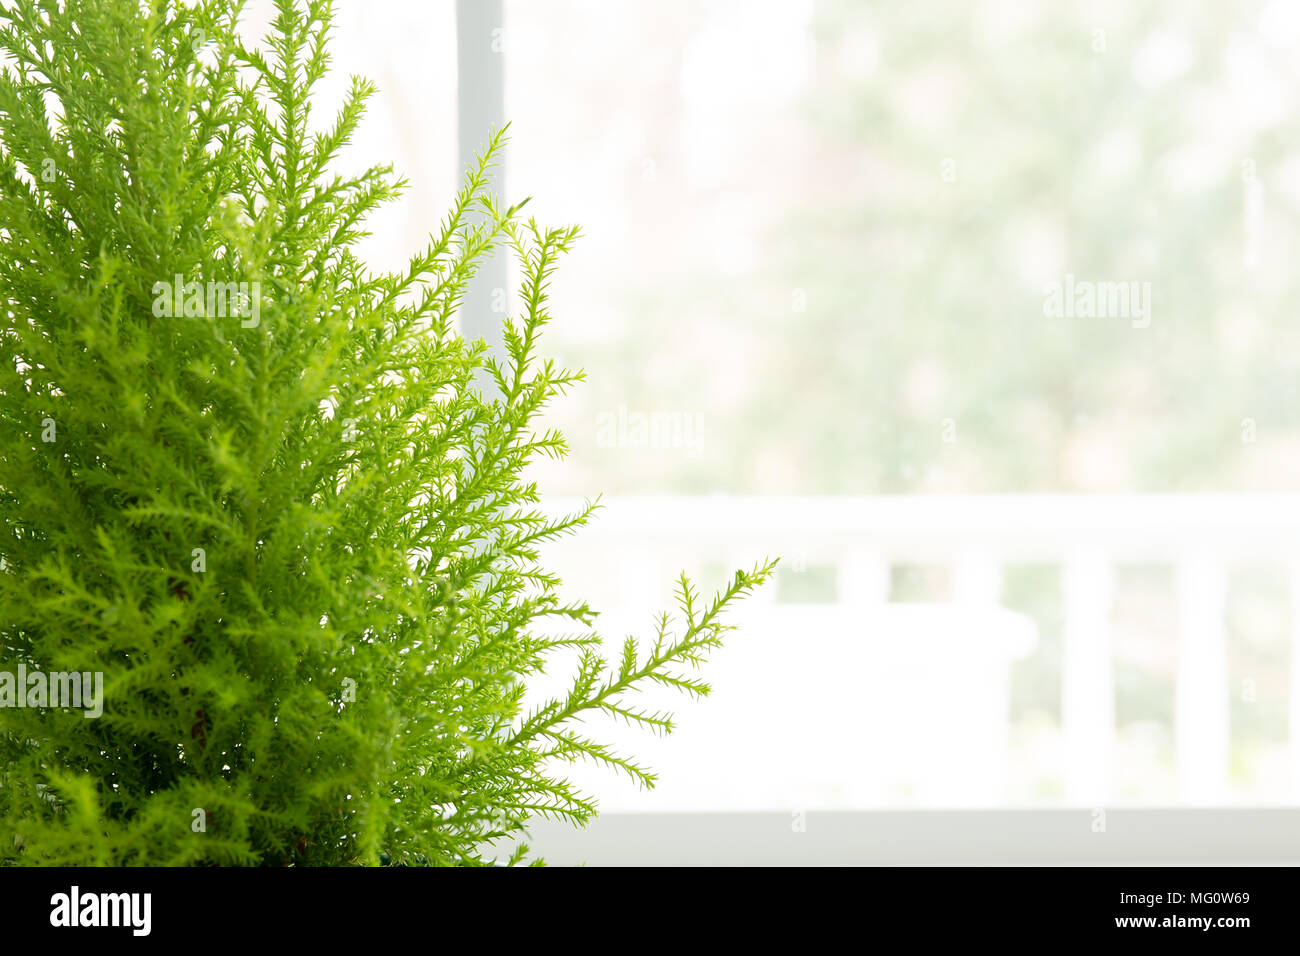 Lemon Cypress plant in green pot next to window Stock Photo